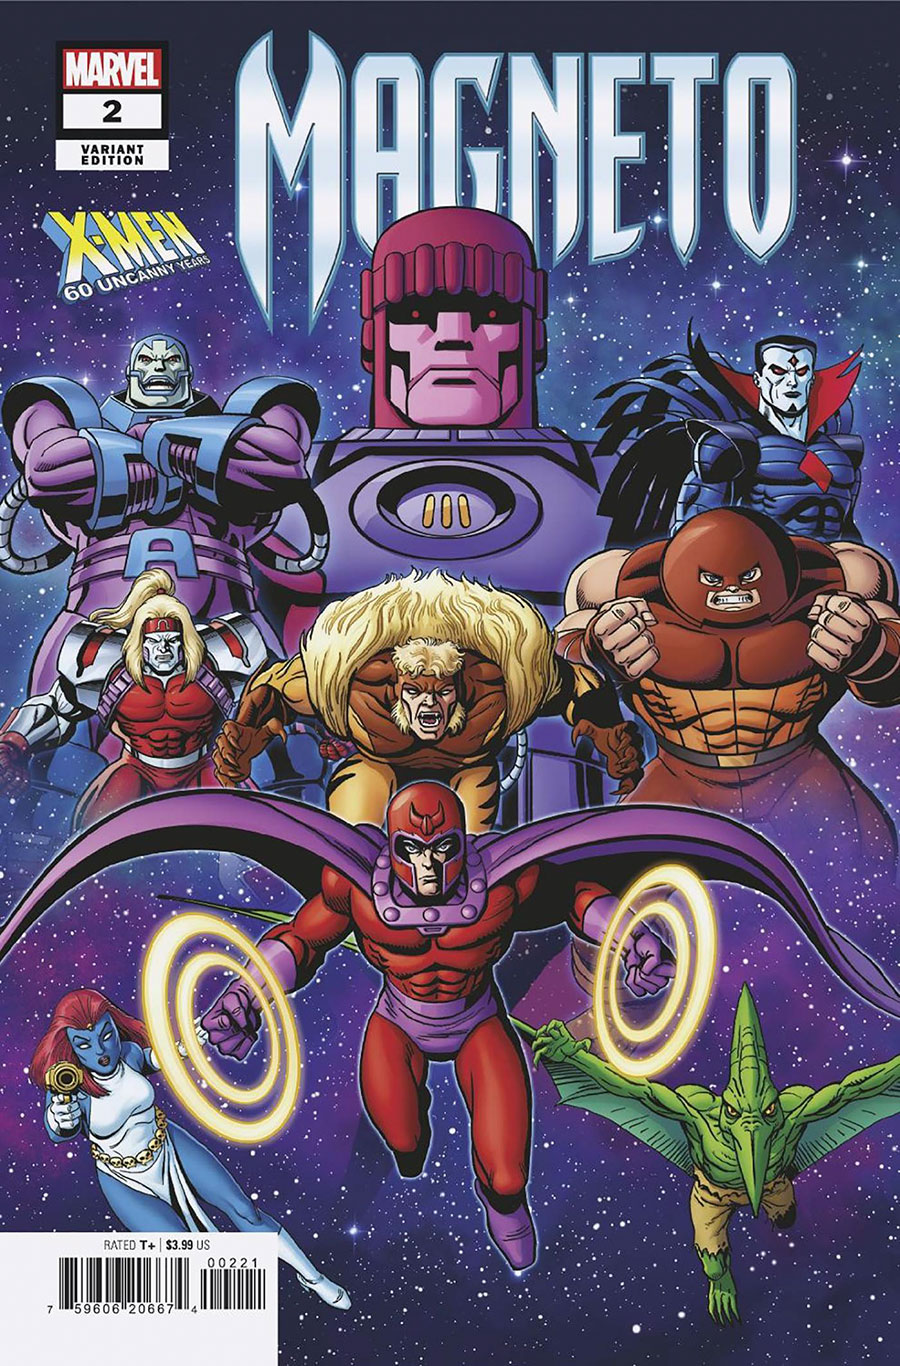 Magneto Vol 4 #2 Cover B Variant Larry Houston X-Men 60th Anniversary Cover (Limit 1 Per Customer)